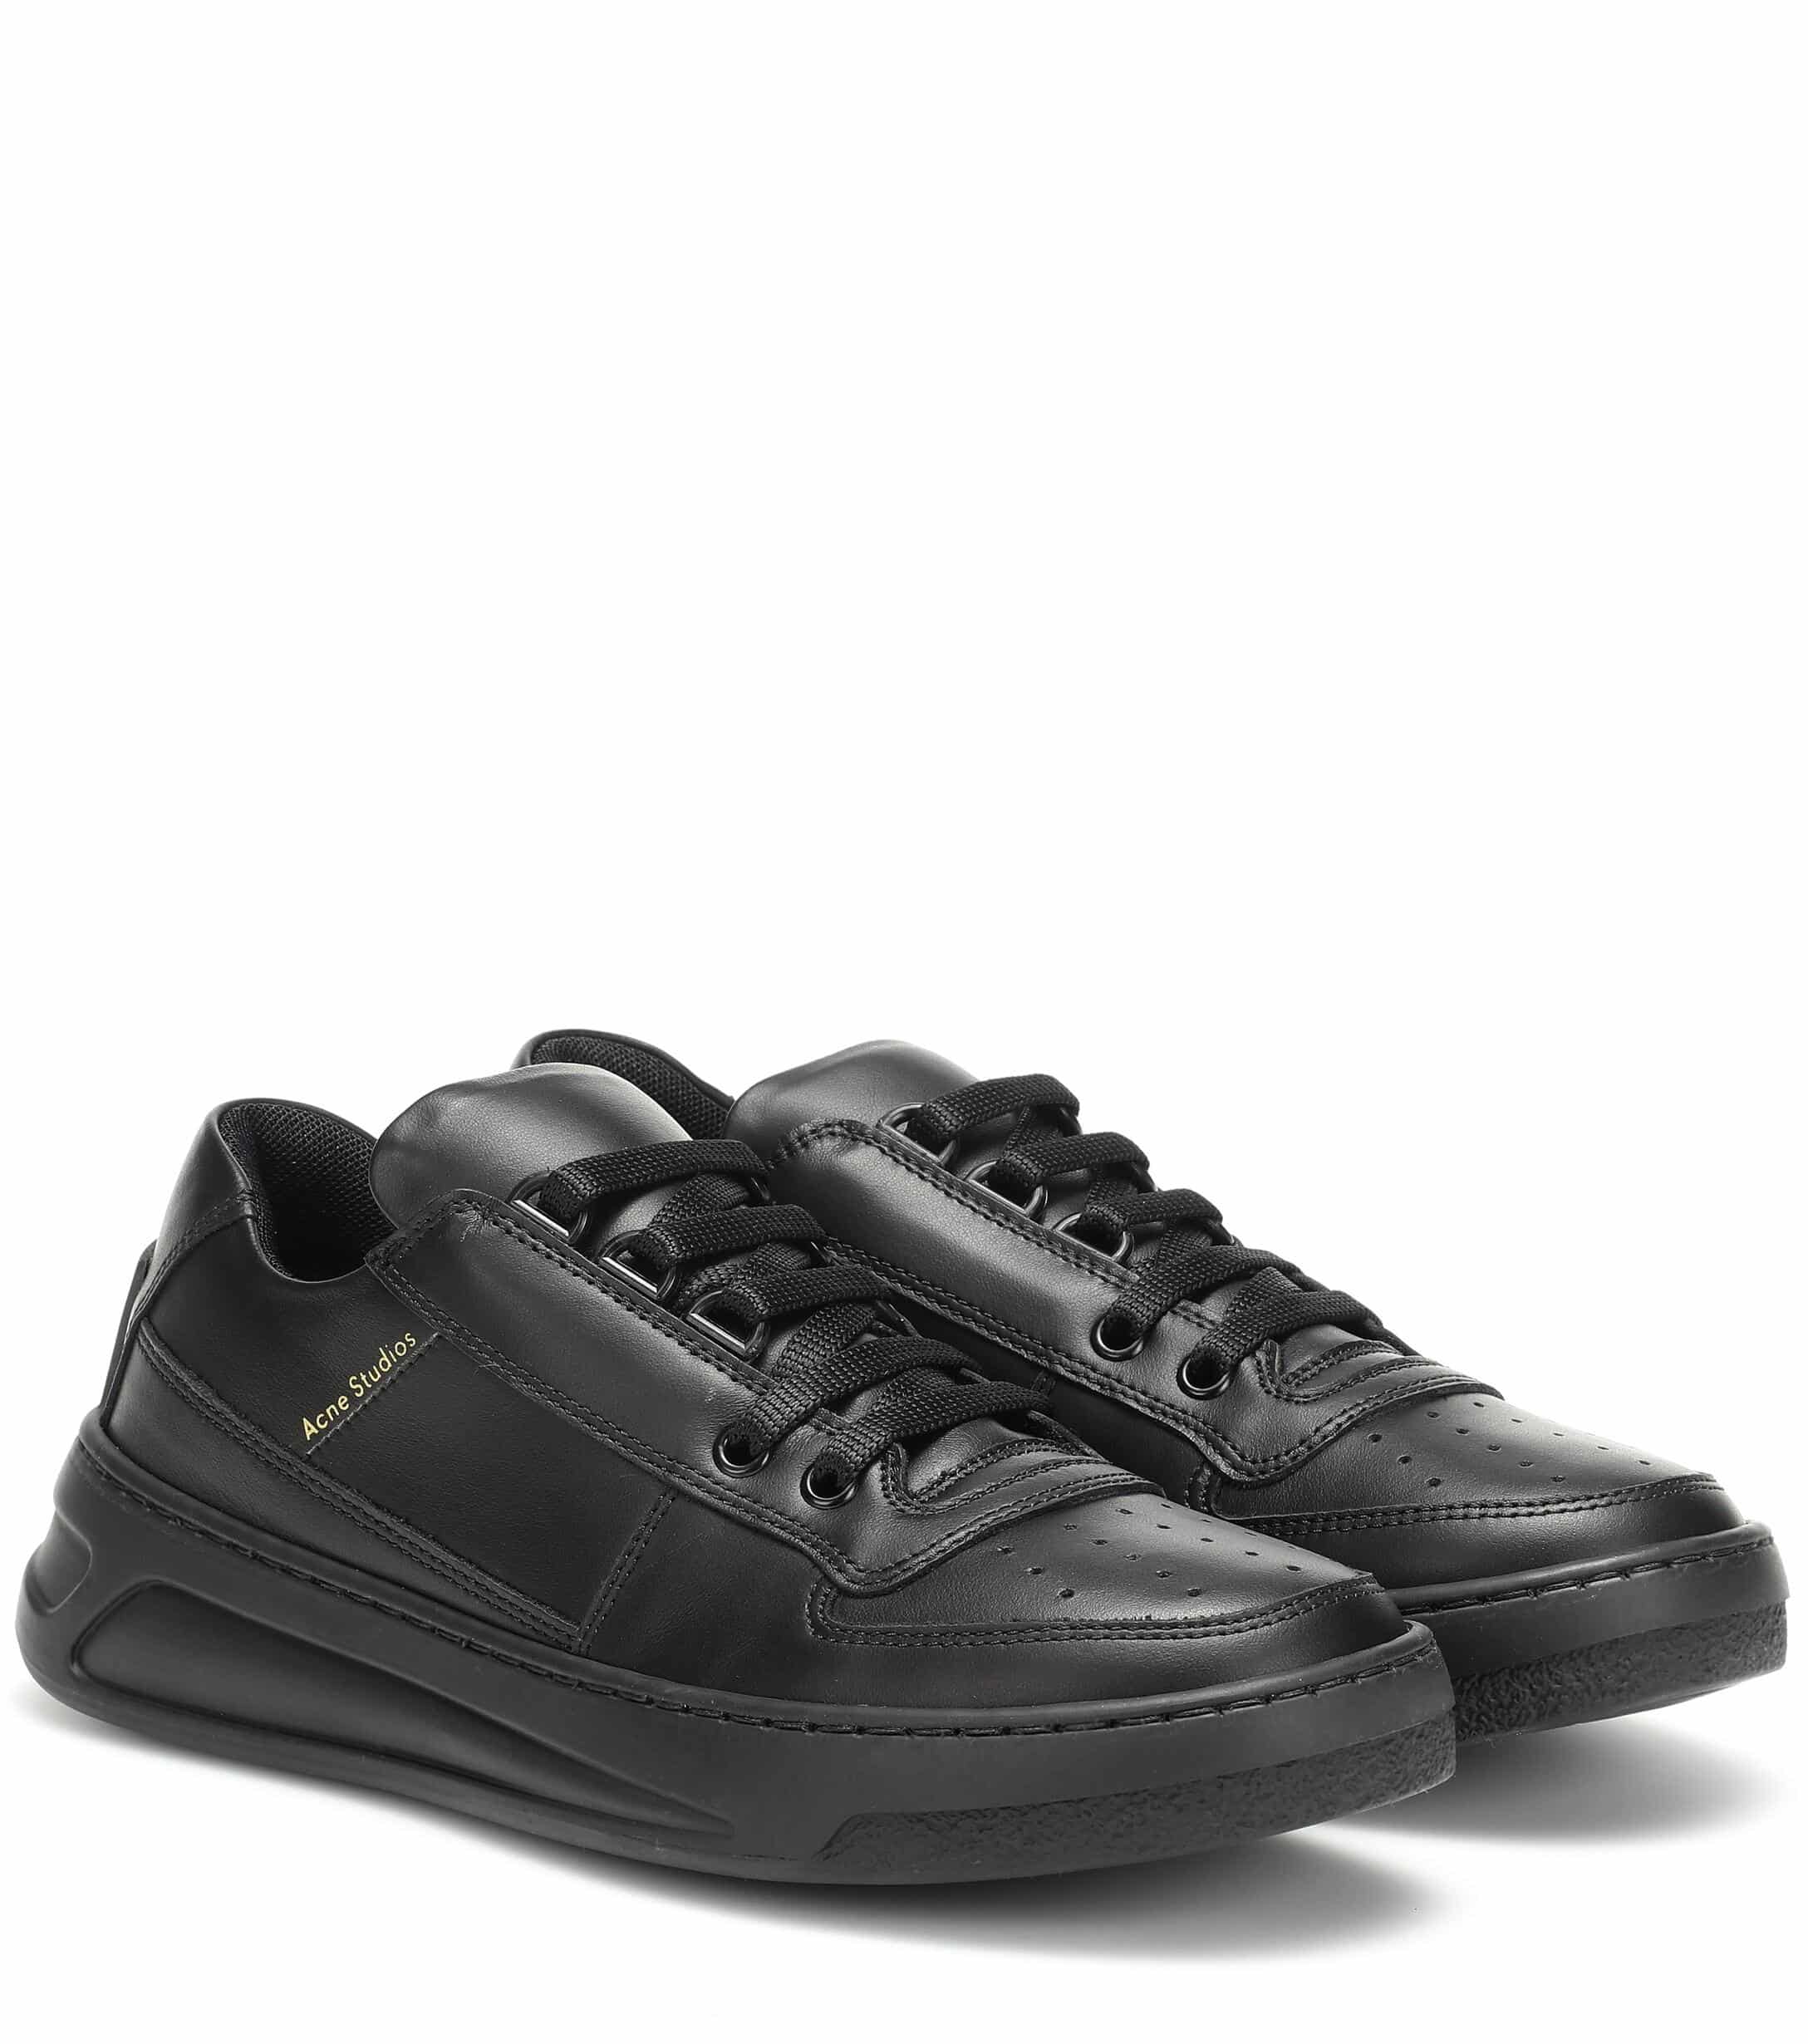 Acne Studios Steffey Leather Sneakers in Black